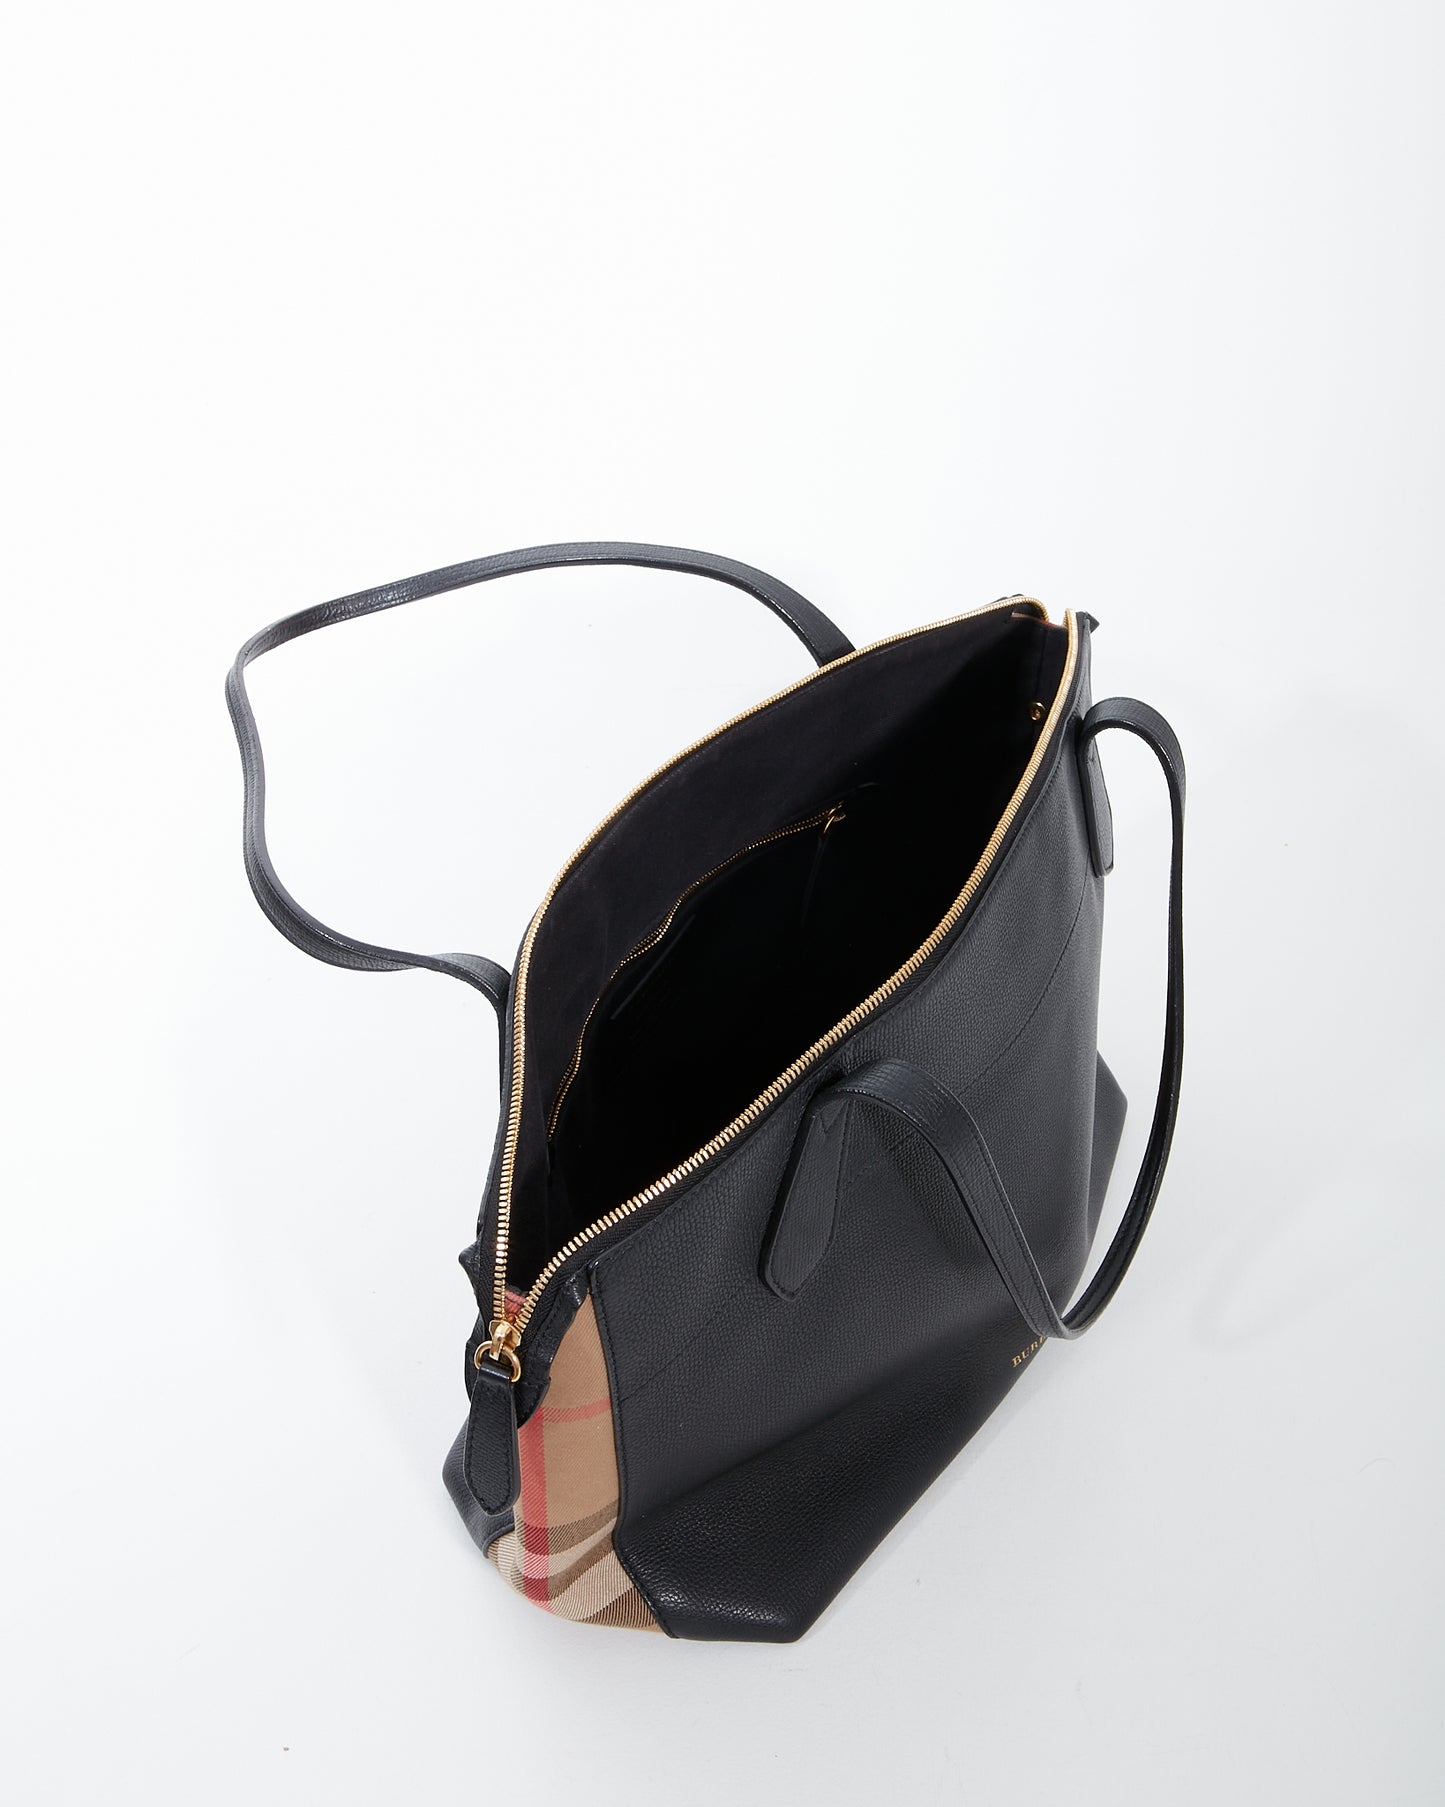 Burberry Black Leather & Canvas Tote Zipper Bag